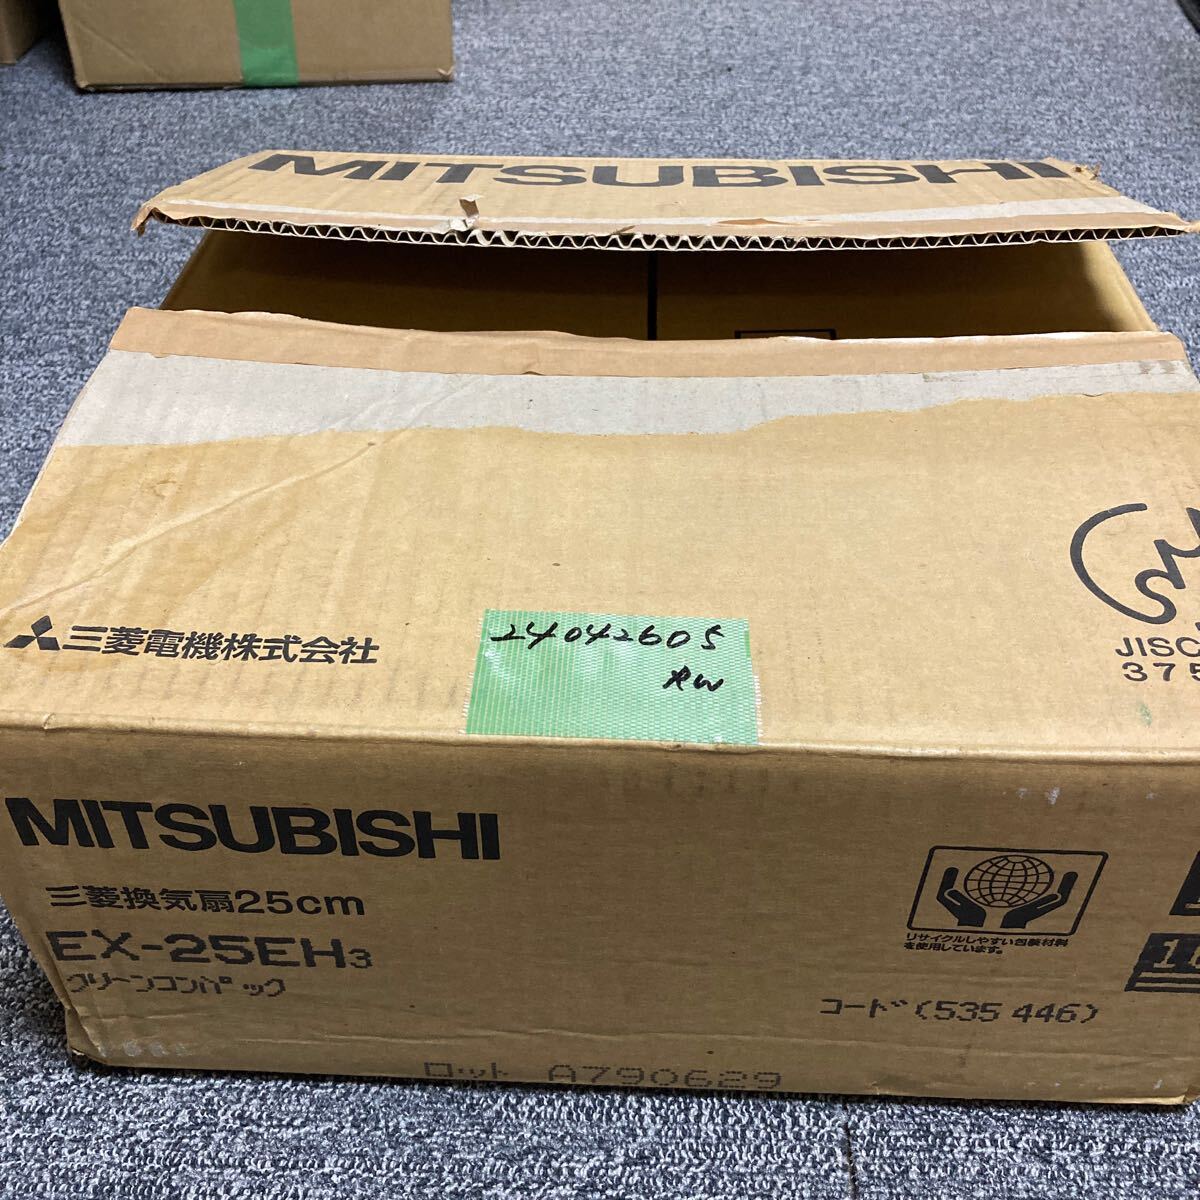  unused MITSUBISHI Mitsubishi exhaust fan 25cm clean Compaq standard panel EX-25EH3